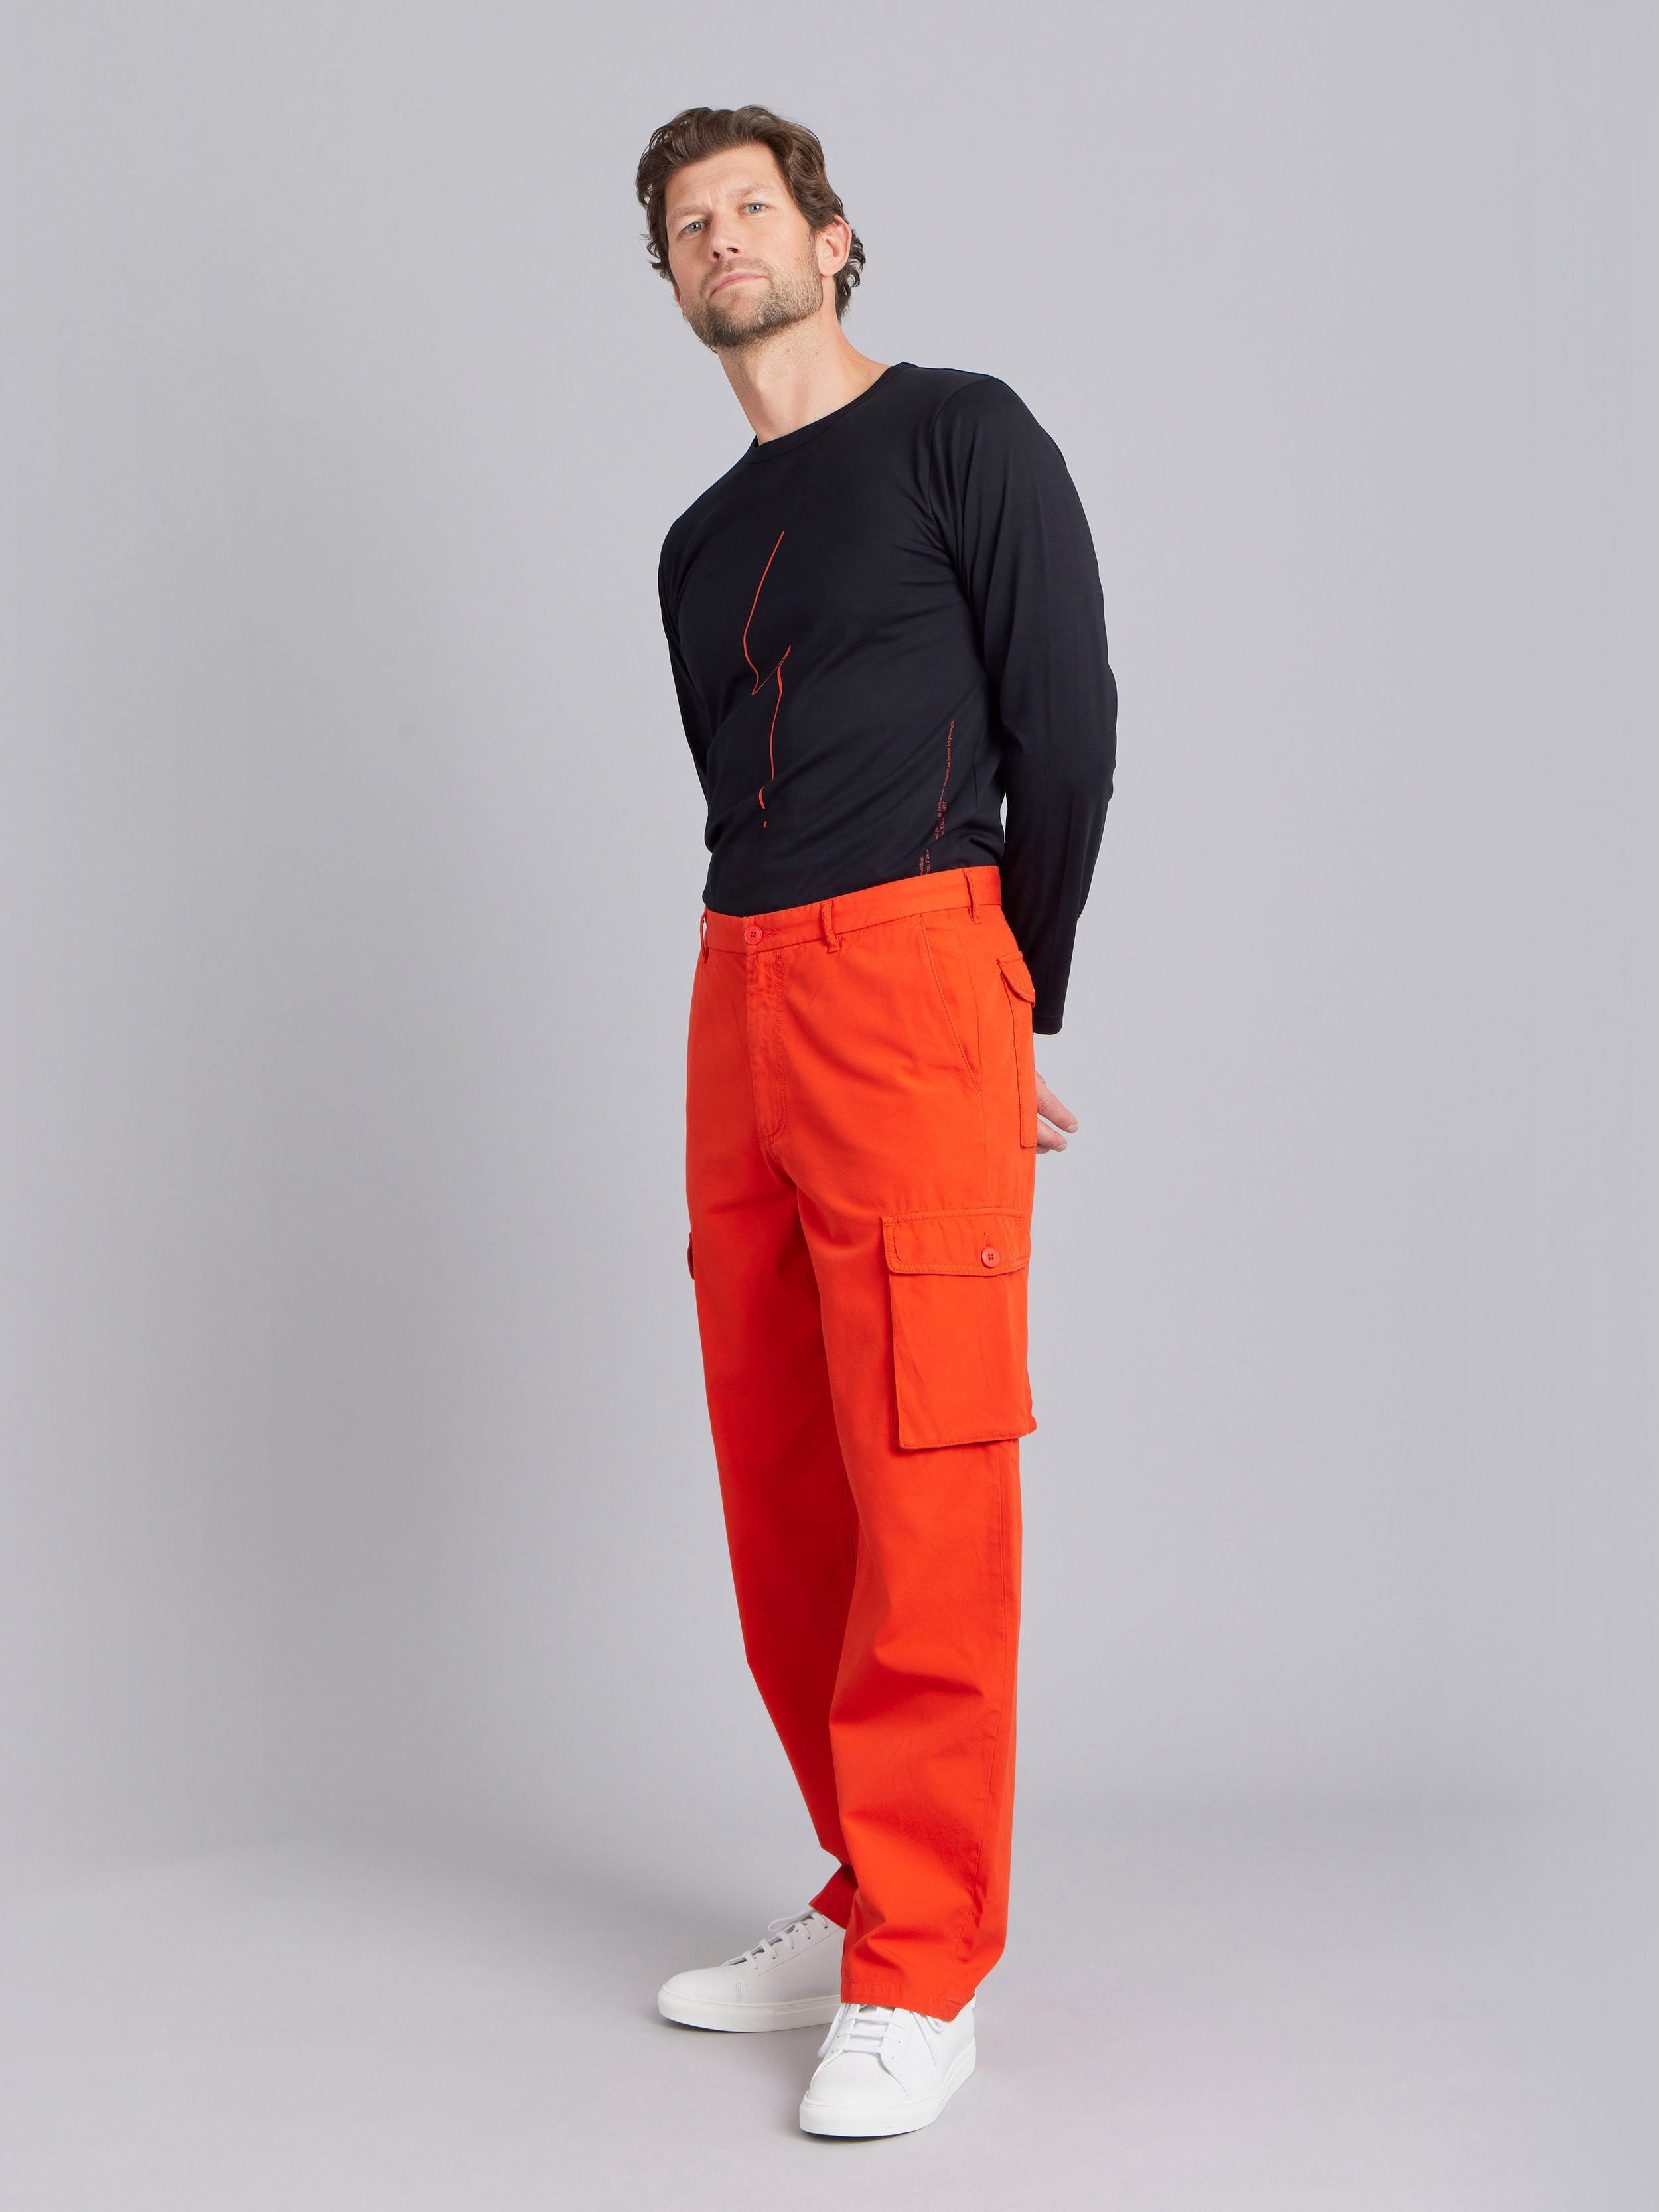 Pantalon de travail ripstop ONDORE - Orange HV - COVERGUARD -  MisterMateriaux